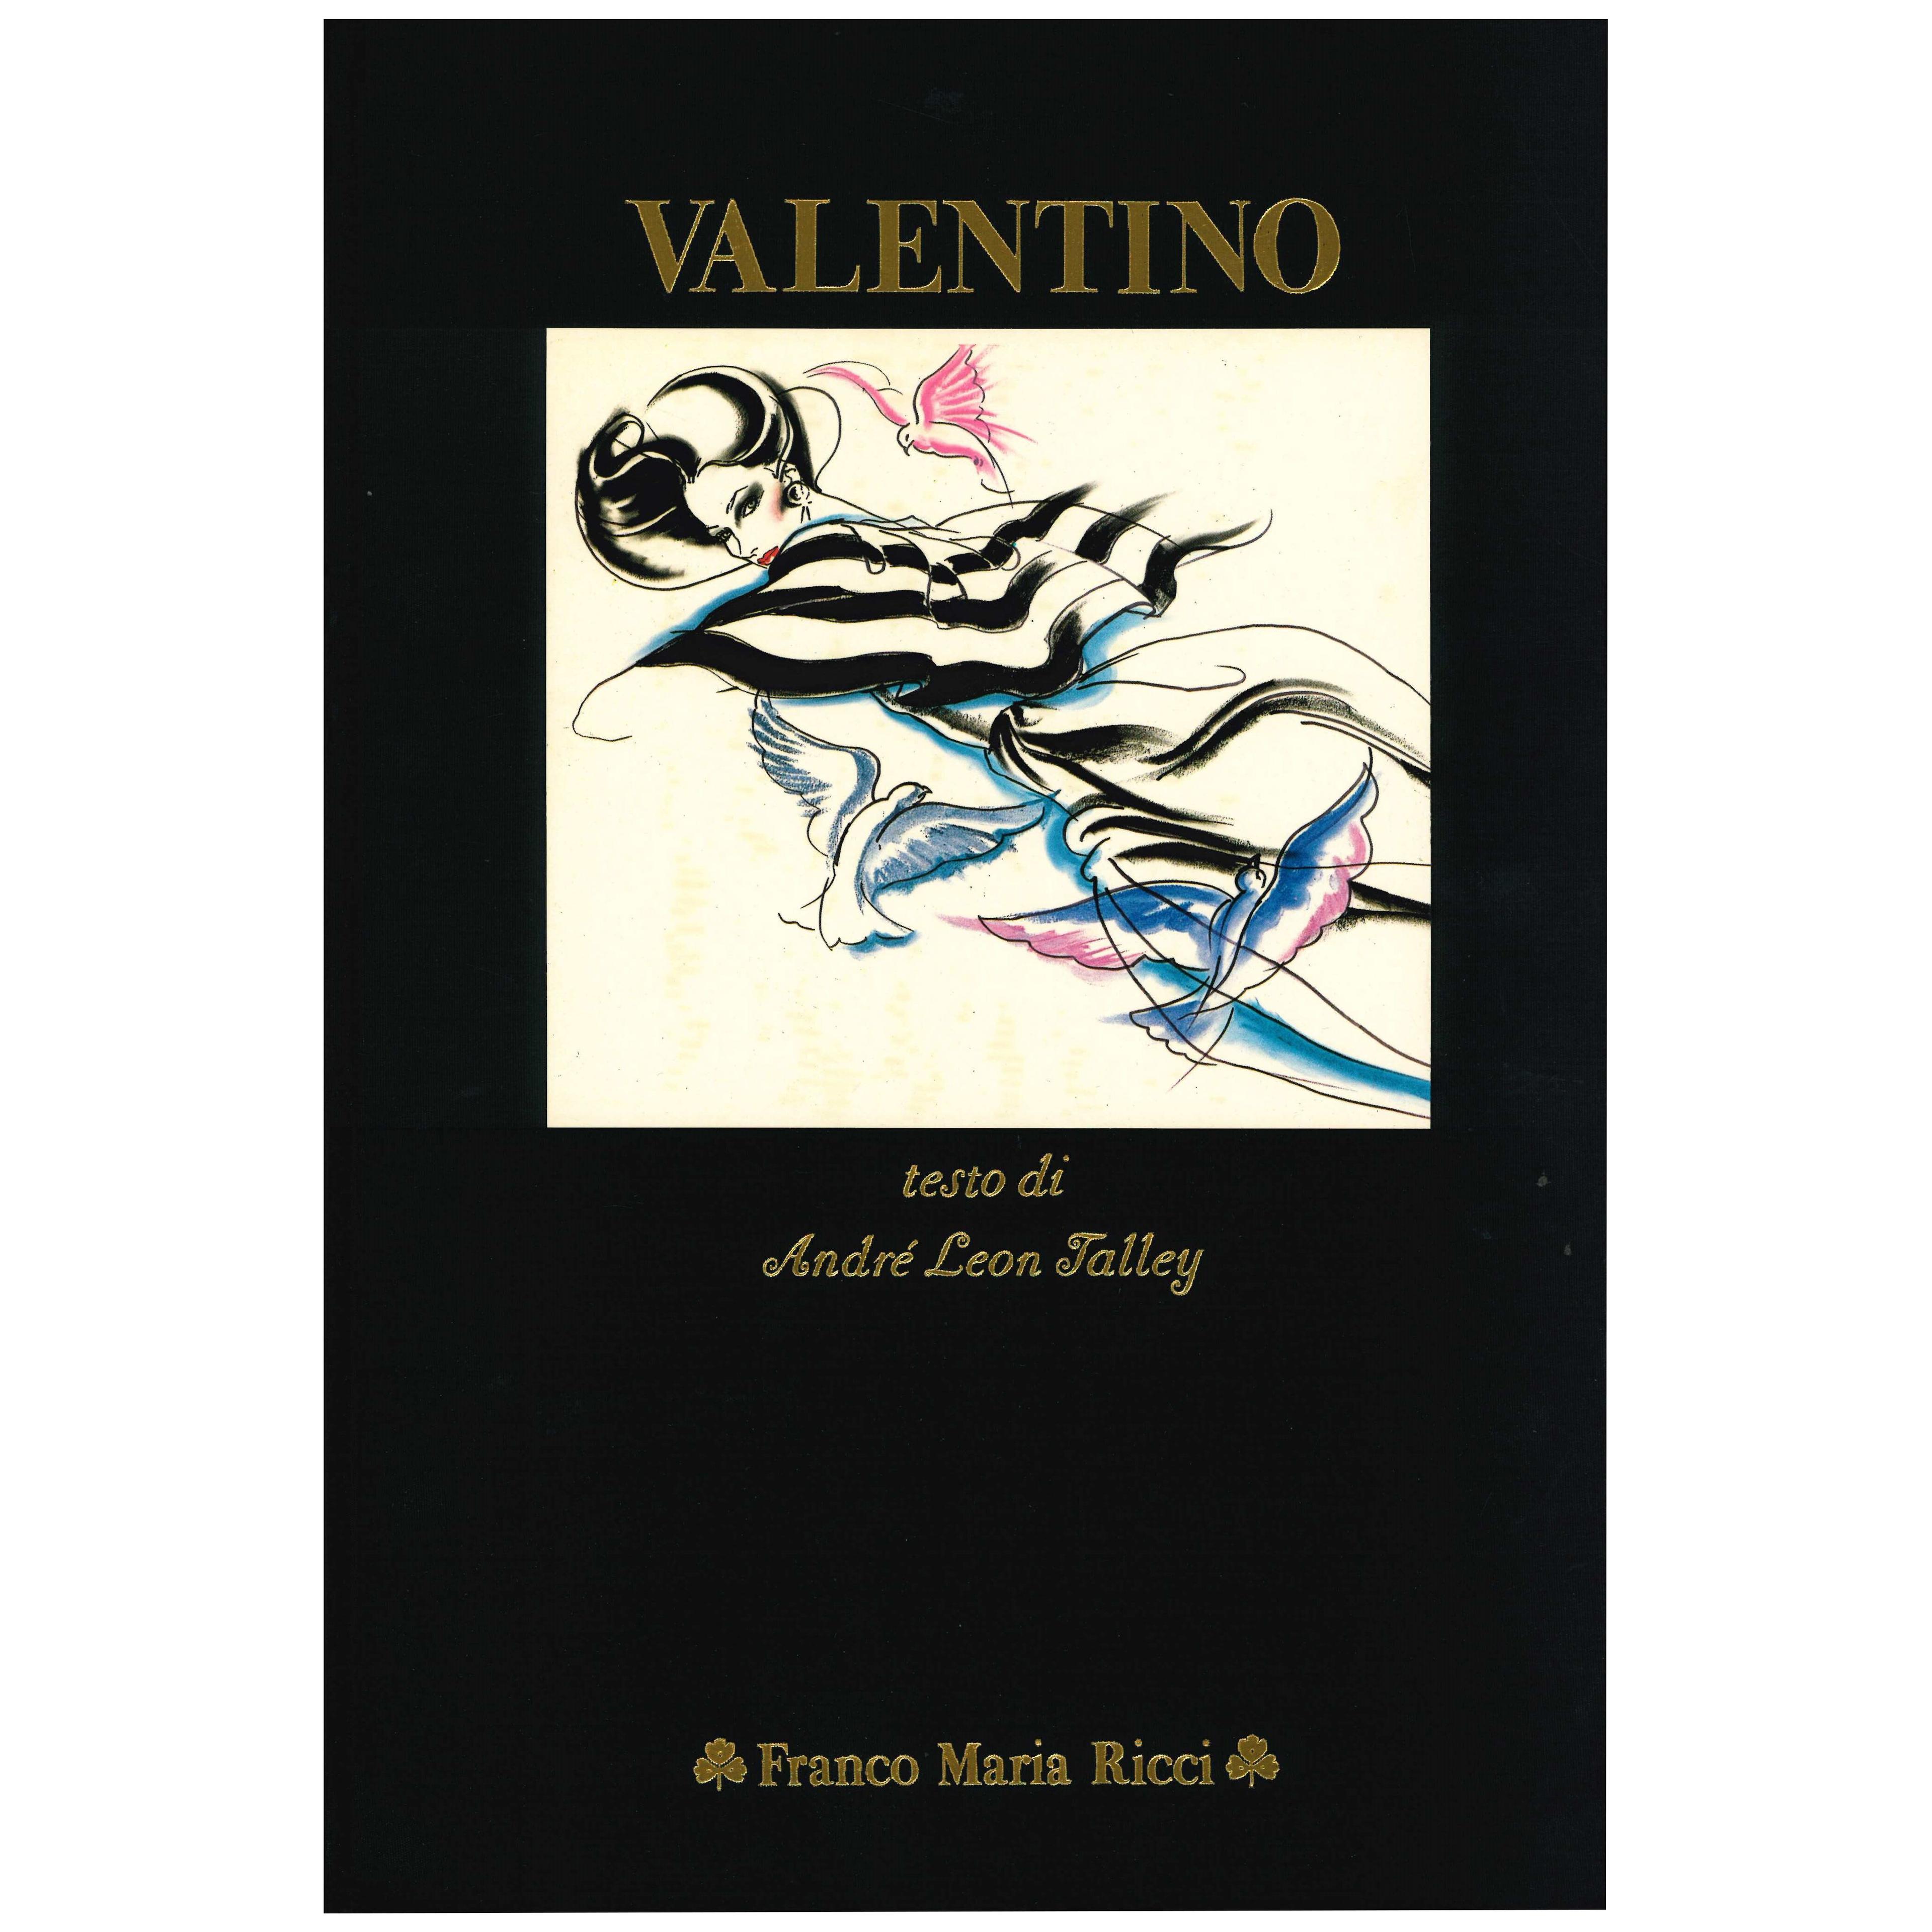 VALINTINO - book on Italian fashion designer